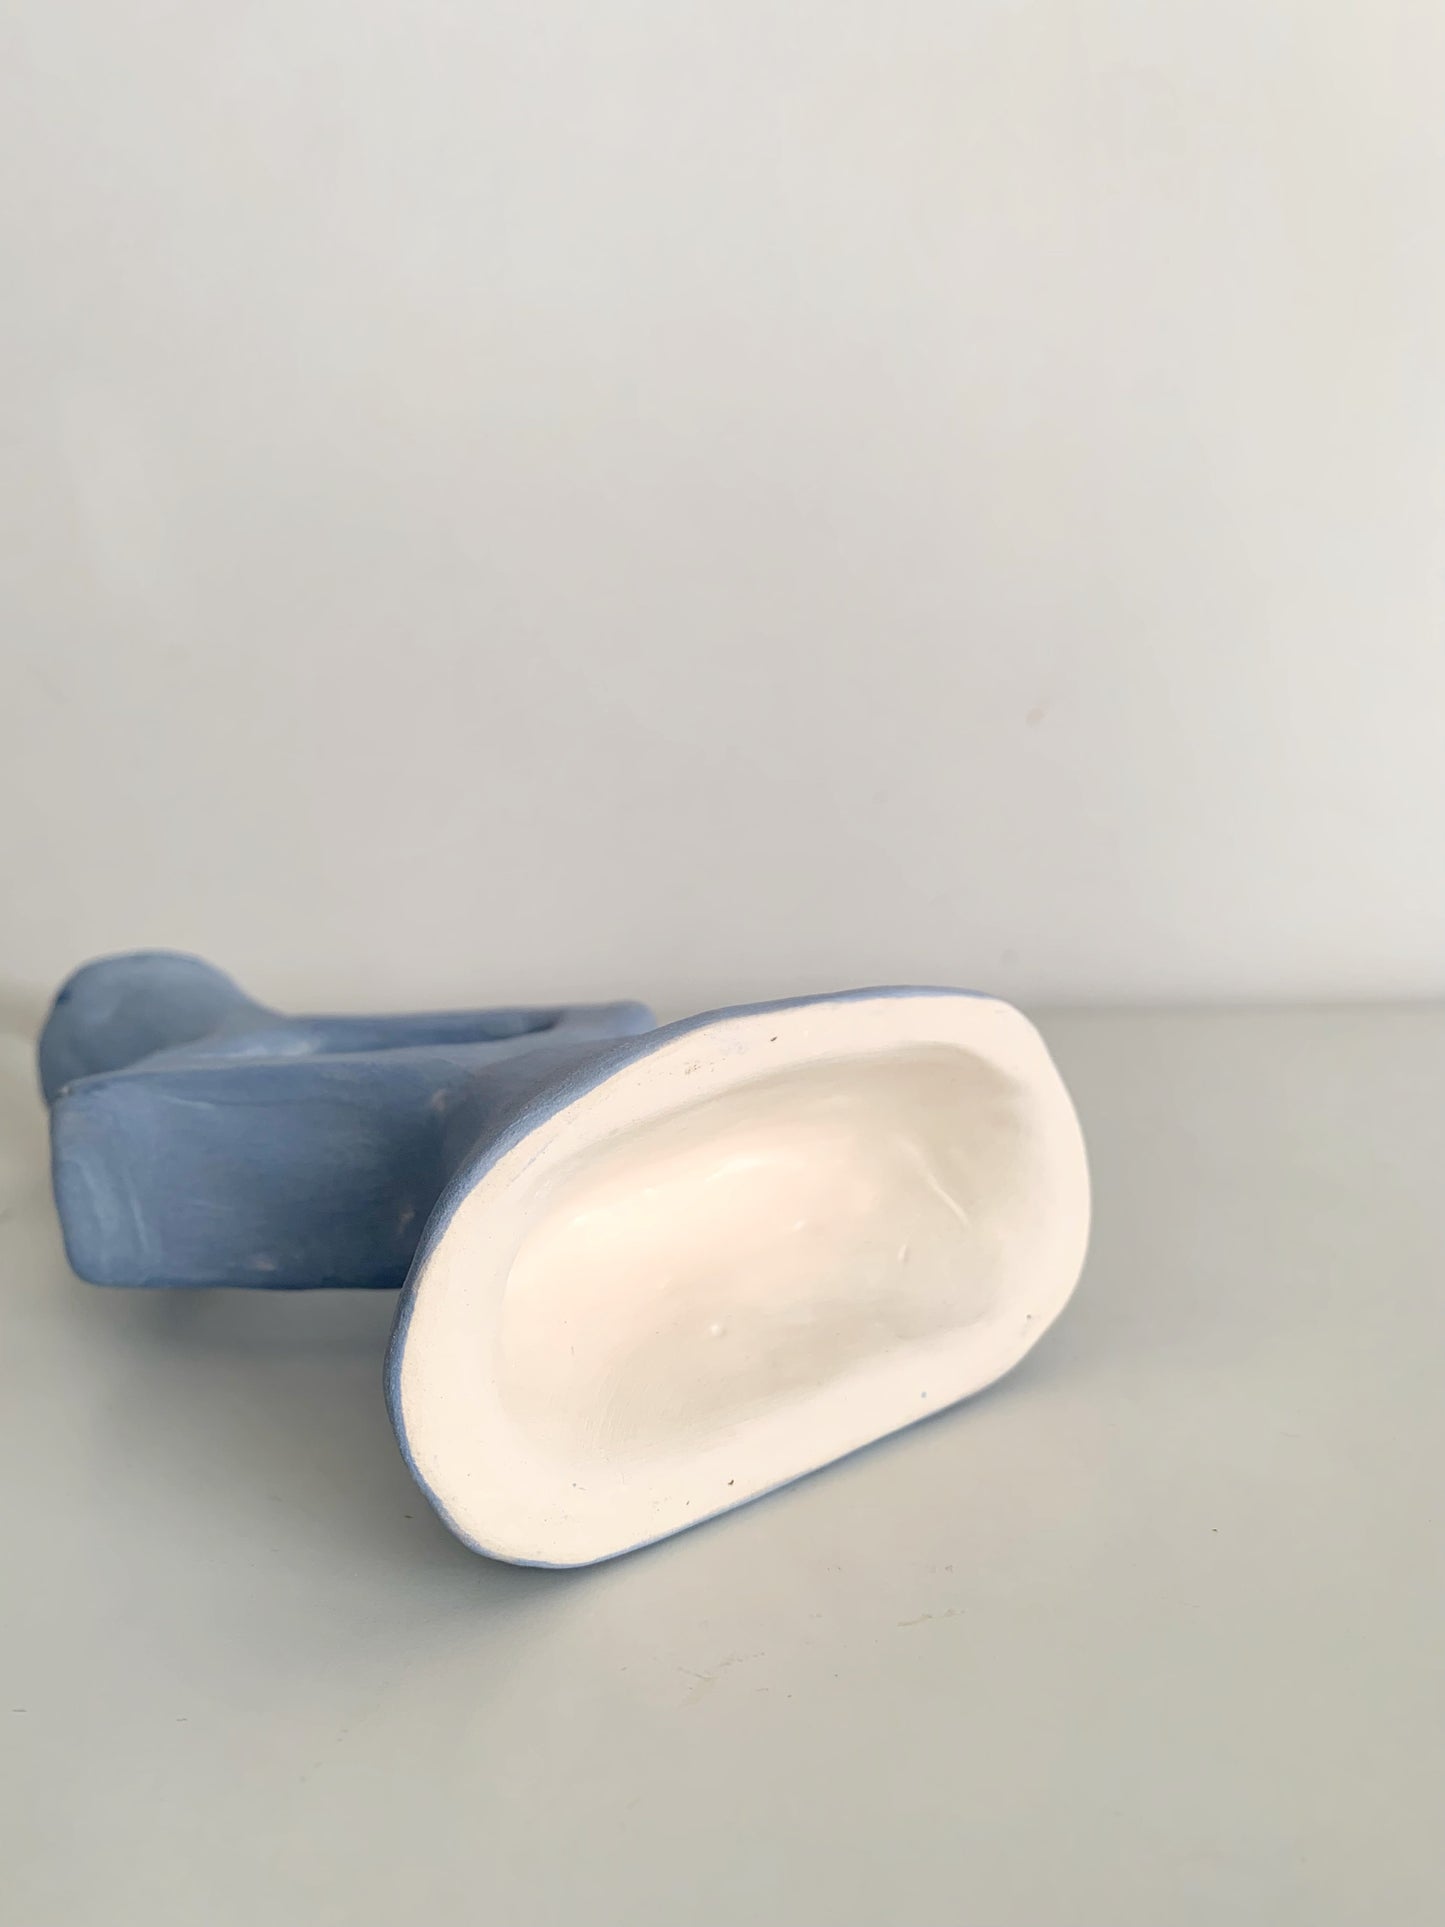 Blue ceramic candleholder